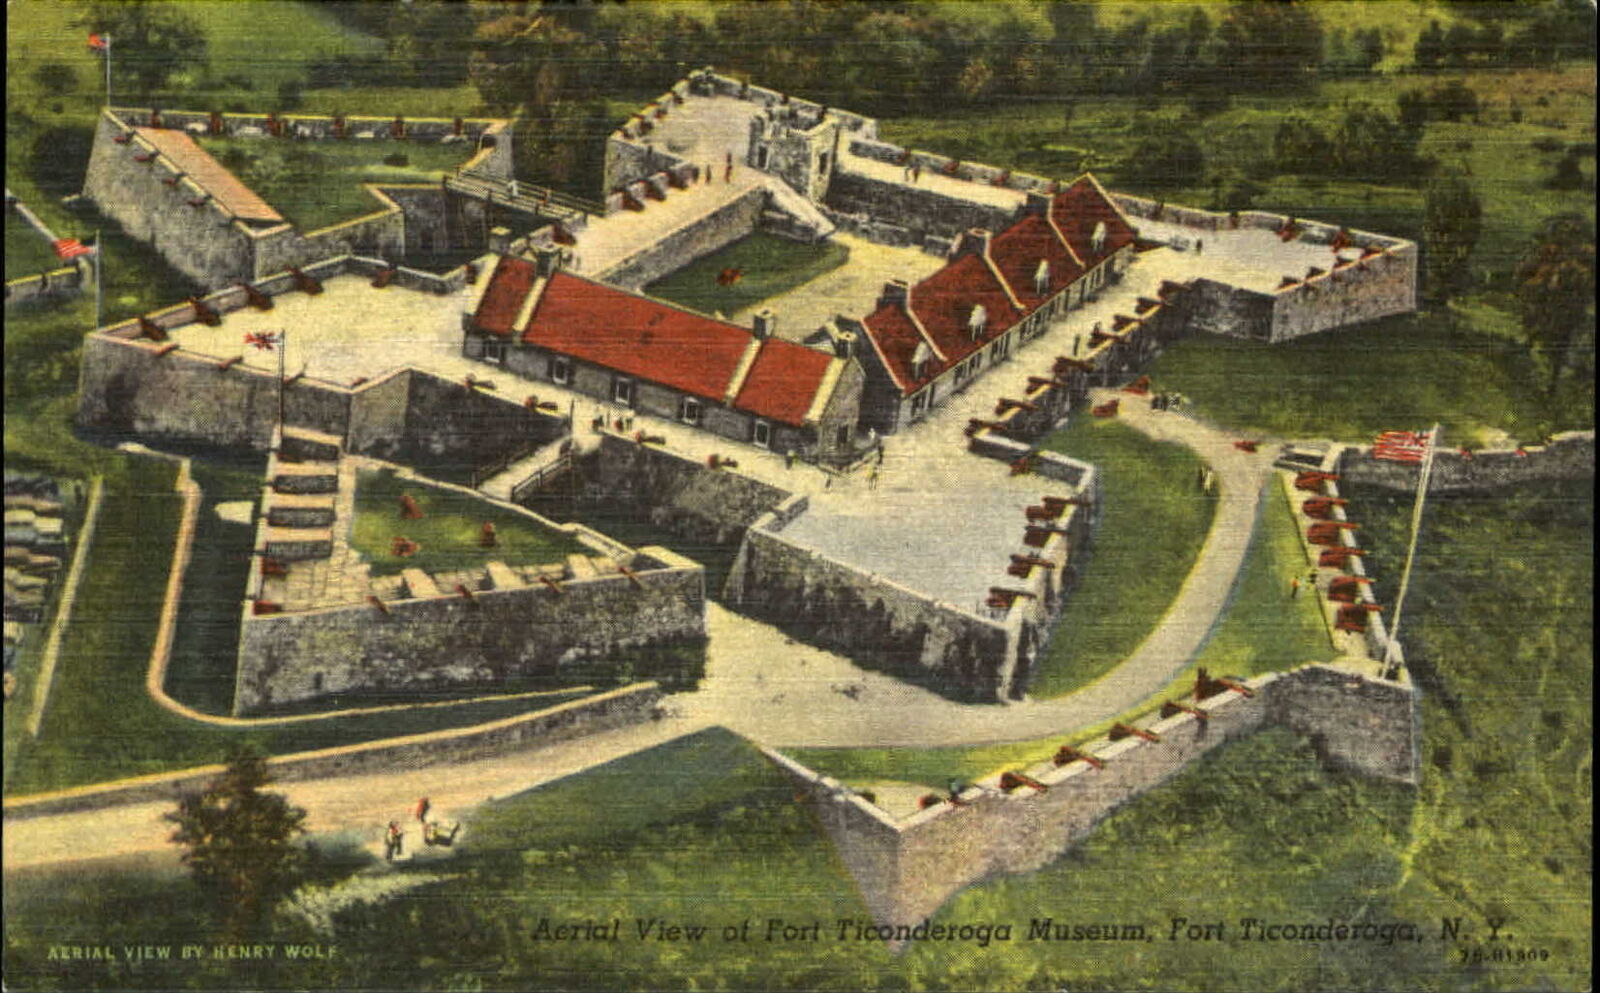 Fort Ticonderoga New York NY aerial view 1940s vintage postcard sku911